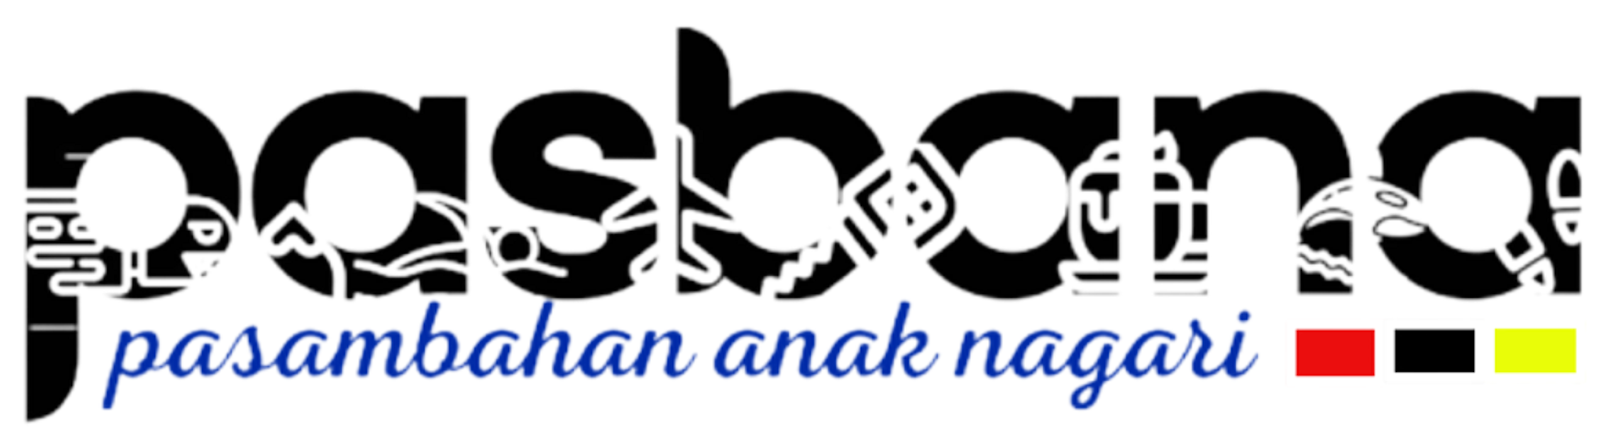 pasbana logo